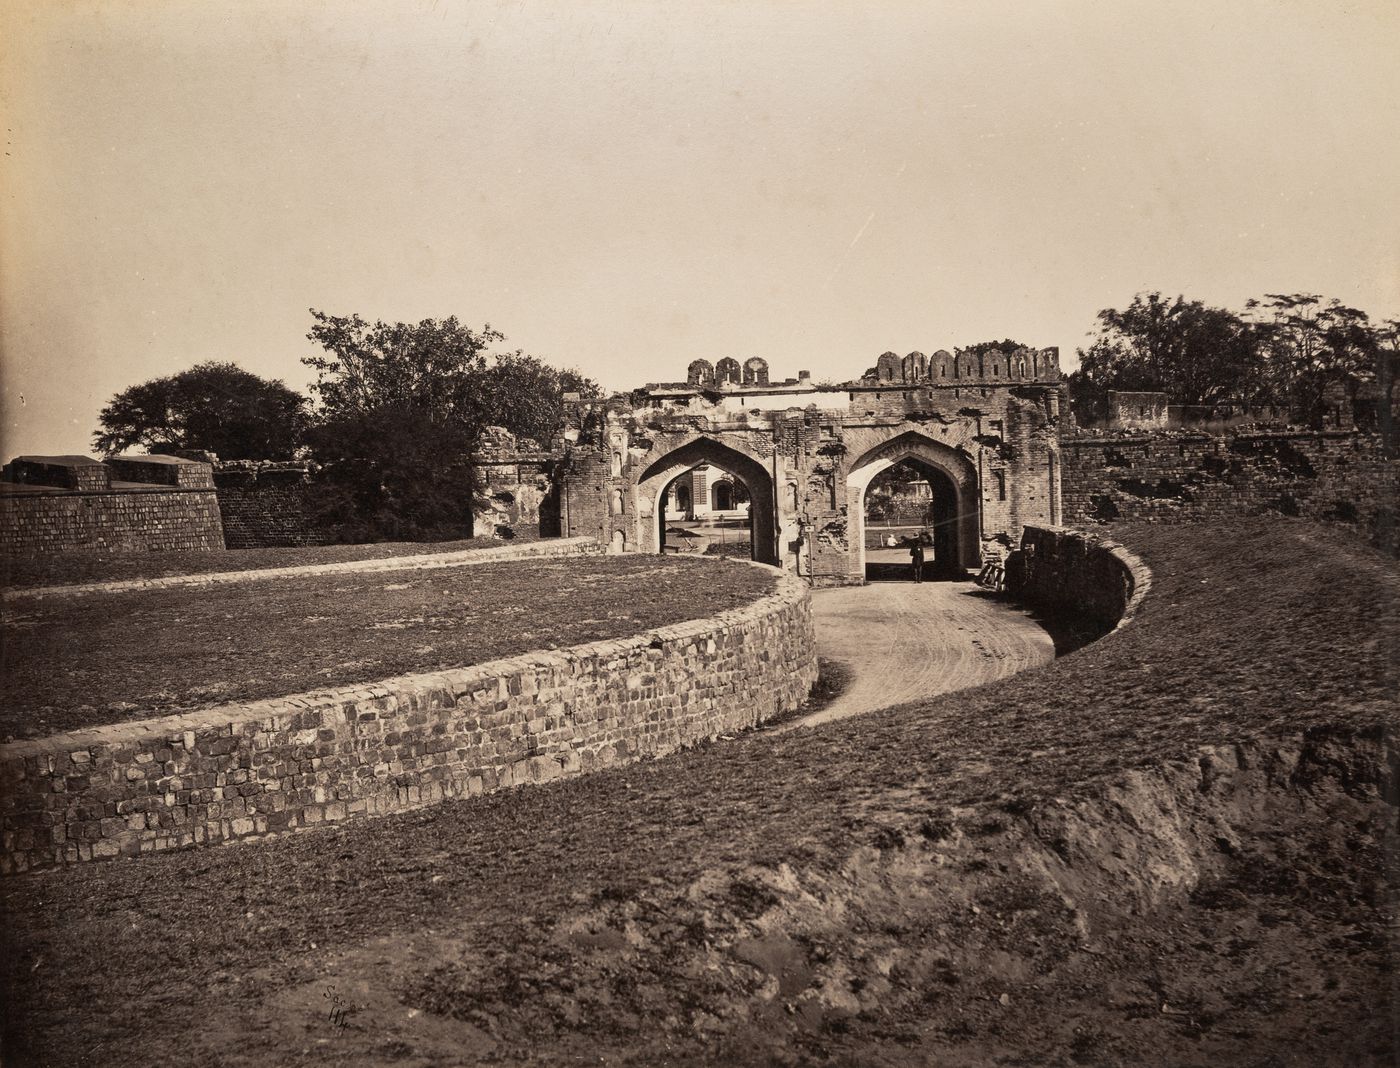 View of the Kashmir Gate, Delhi (now Delhi Union Territory), India